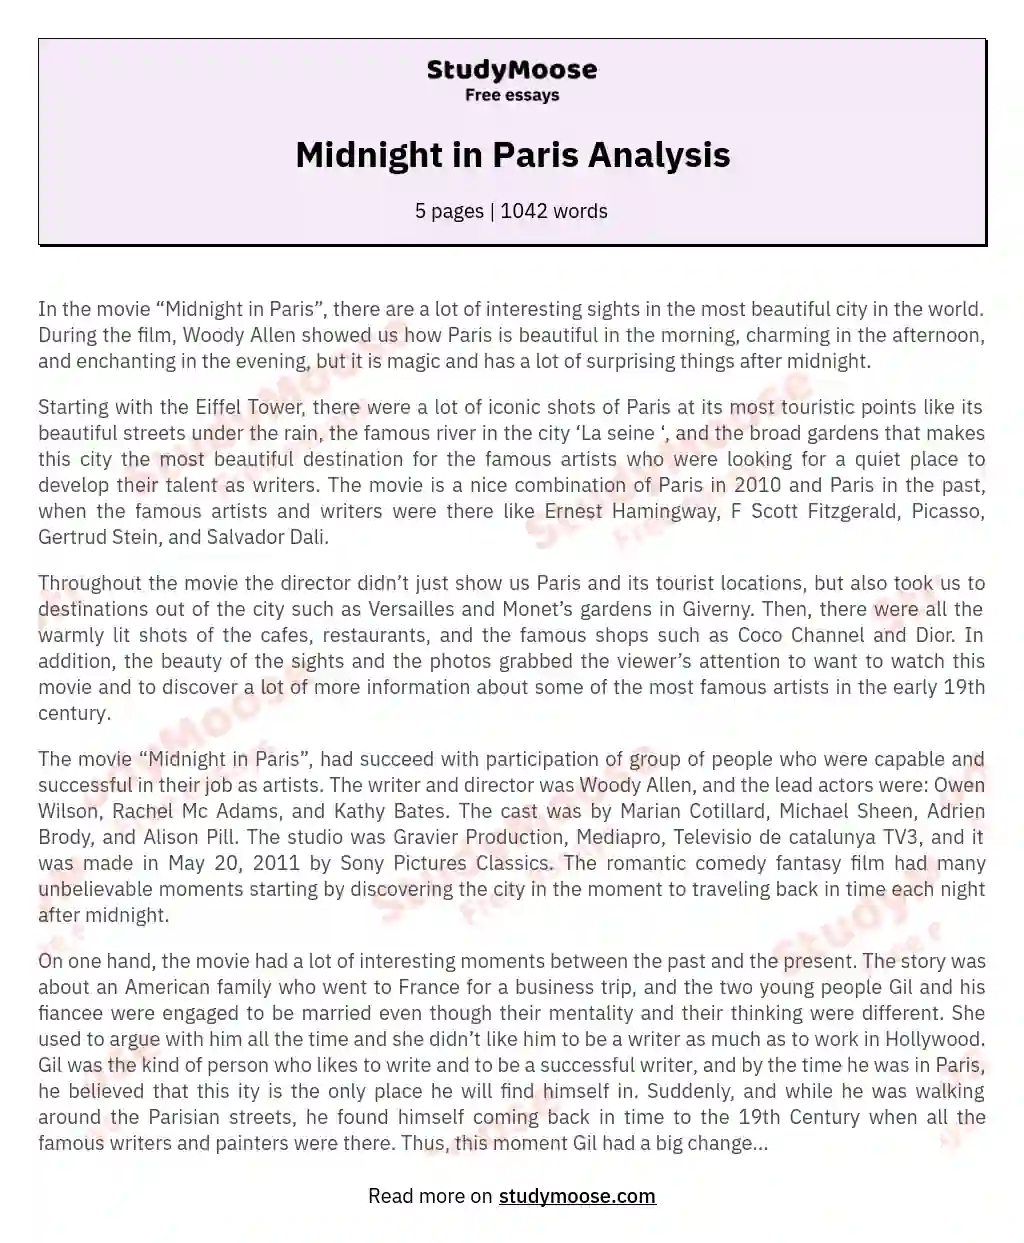 Midnight in Paris Analysis